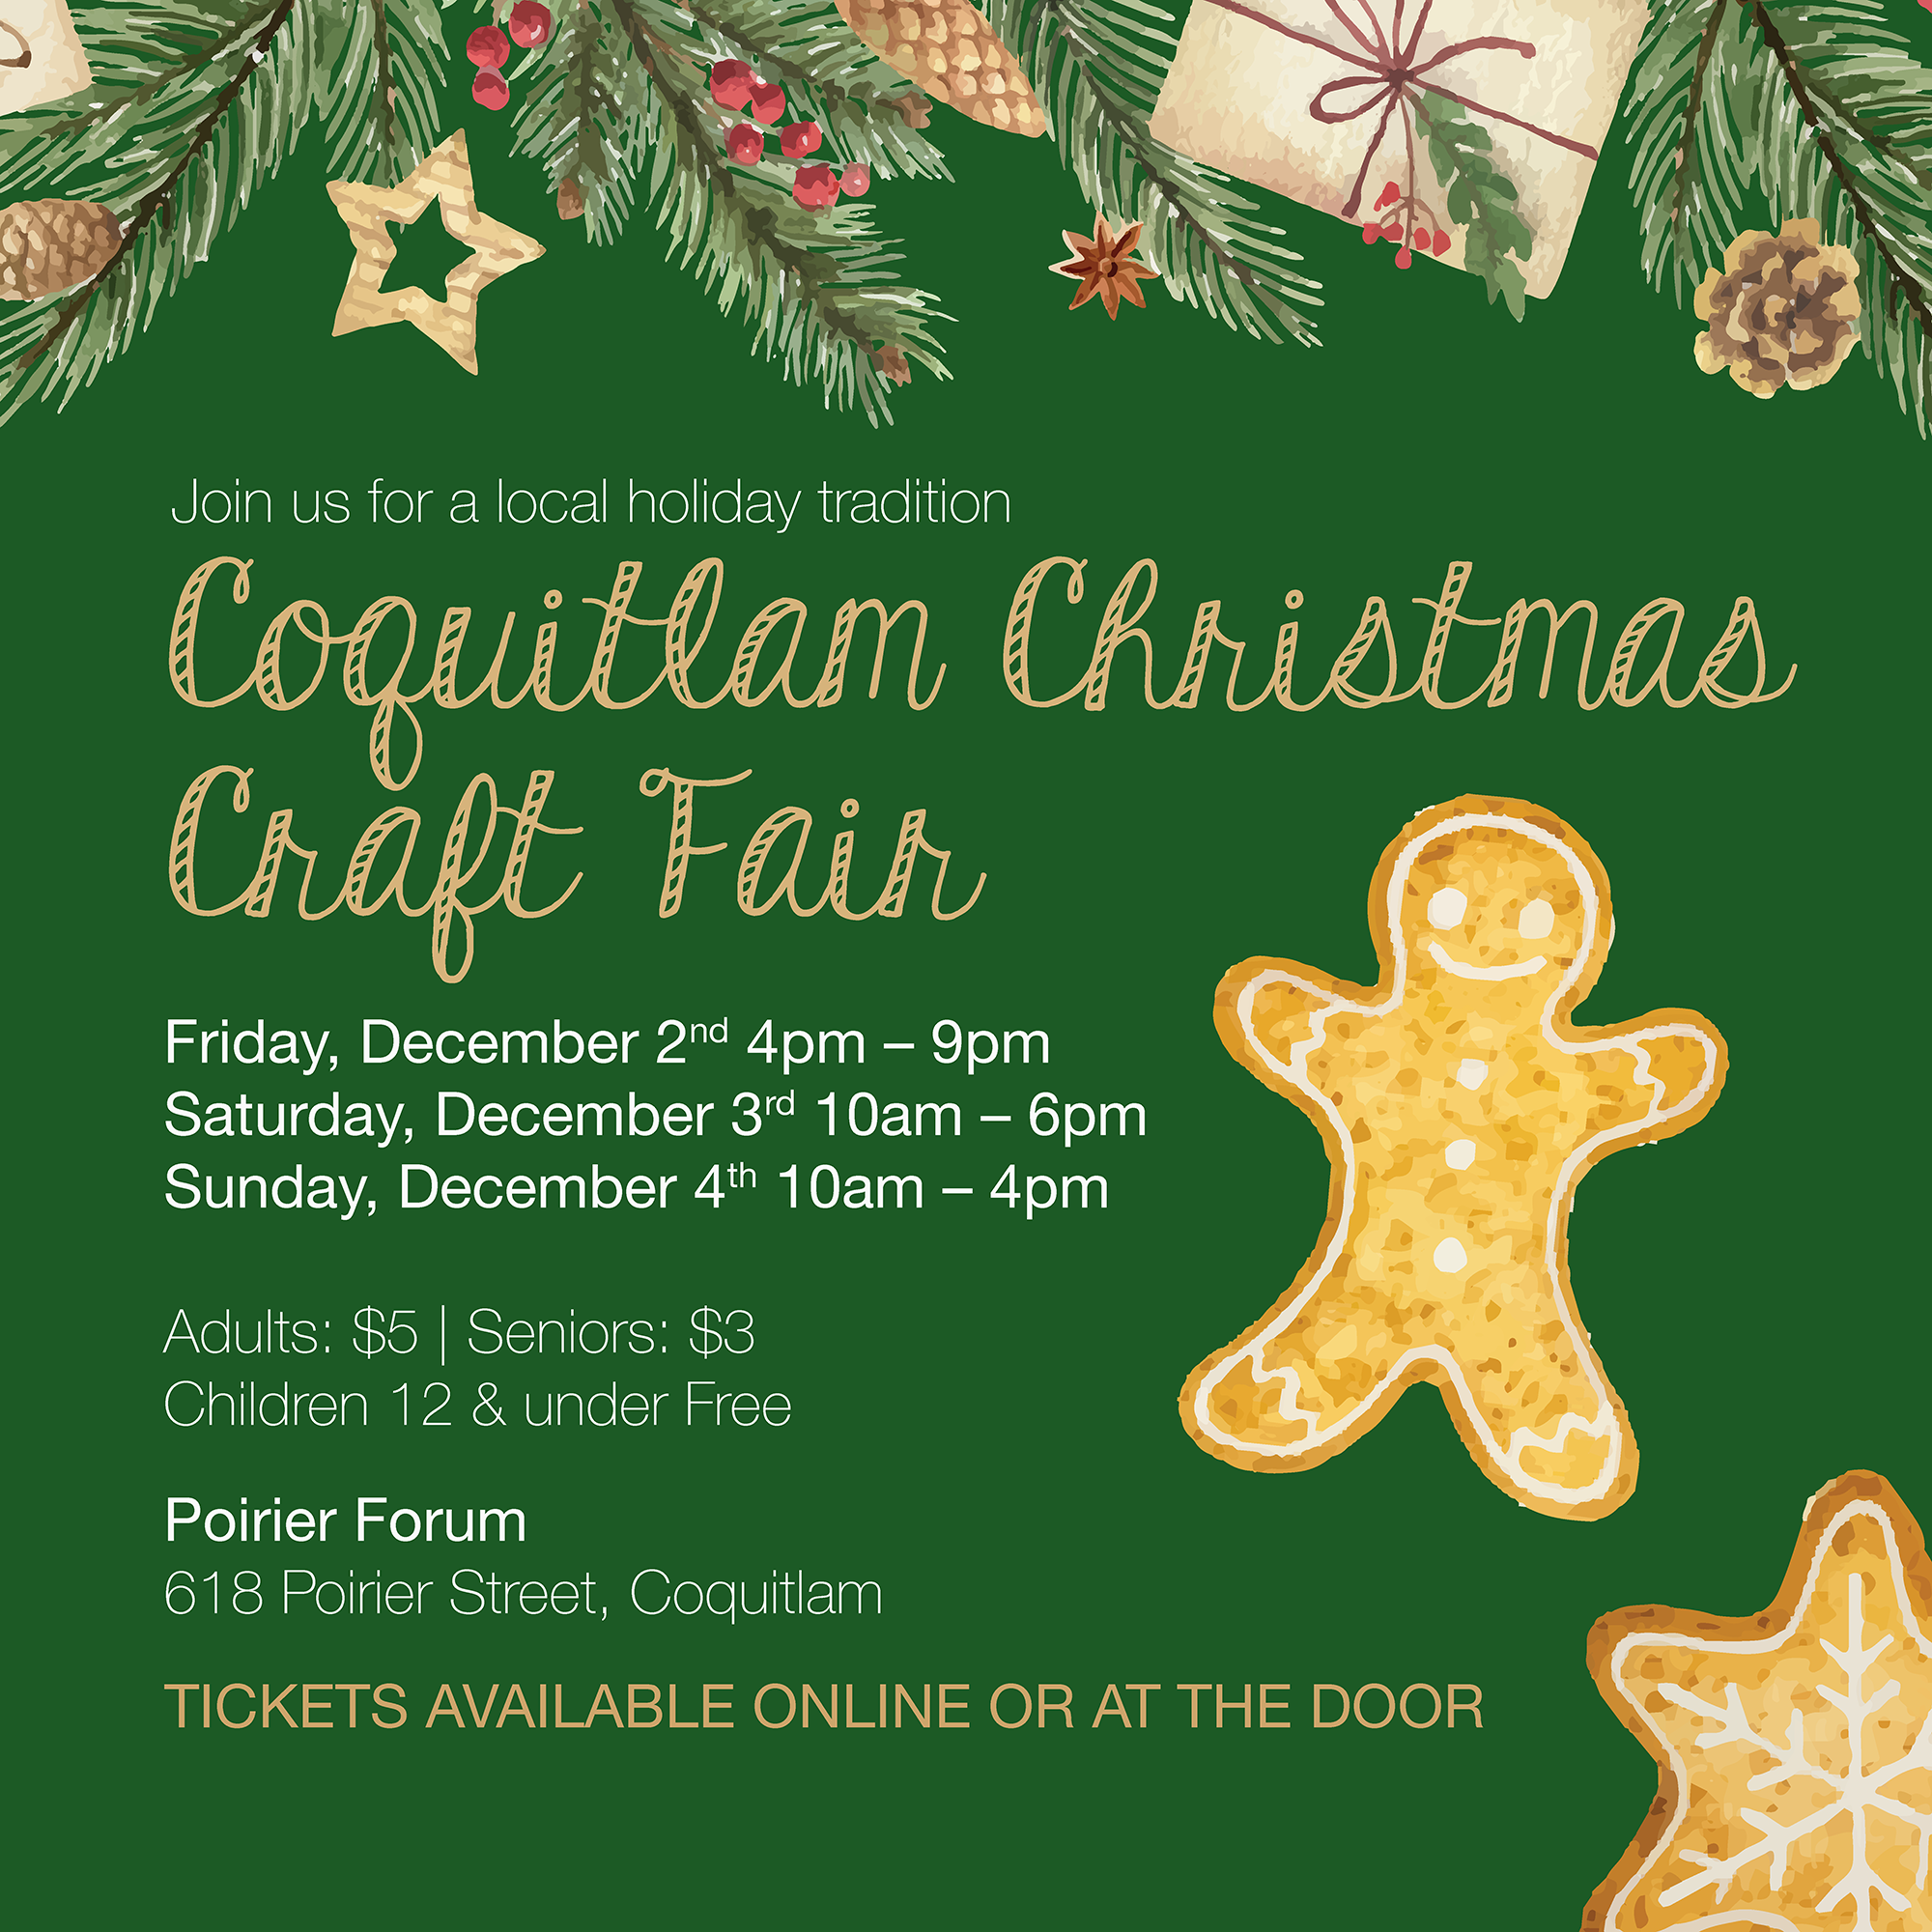 Coquitlam Christmas Craft Fair, December 2-4